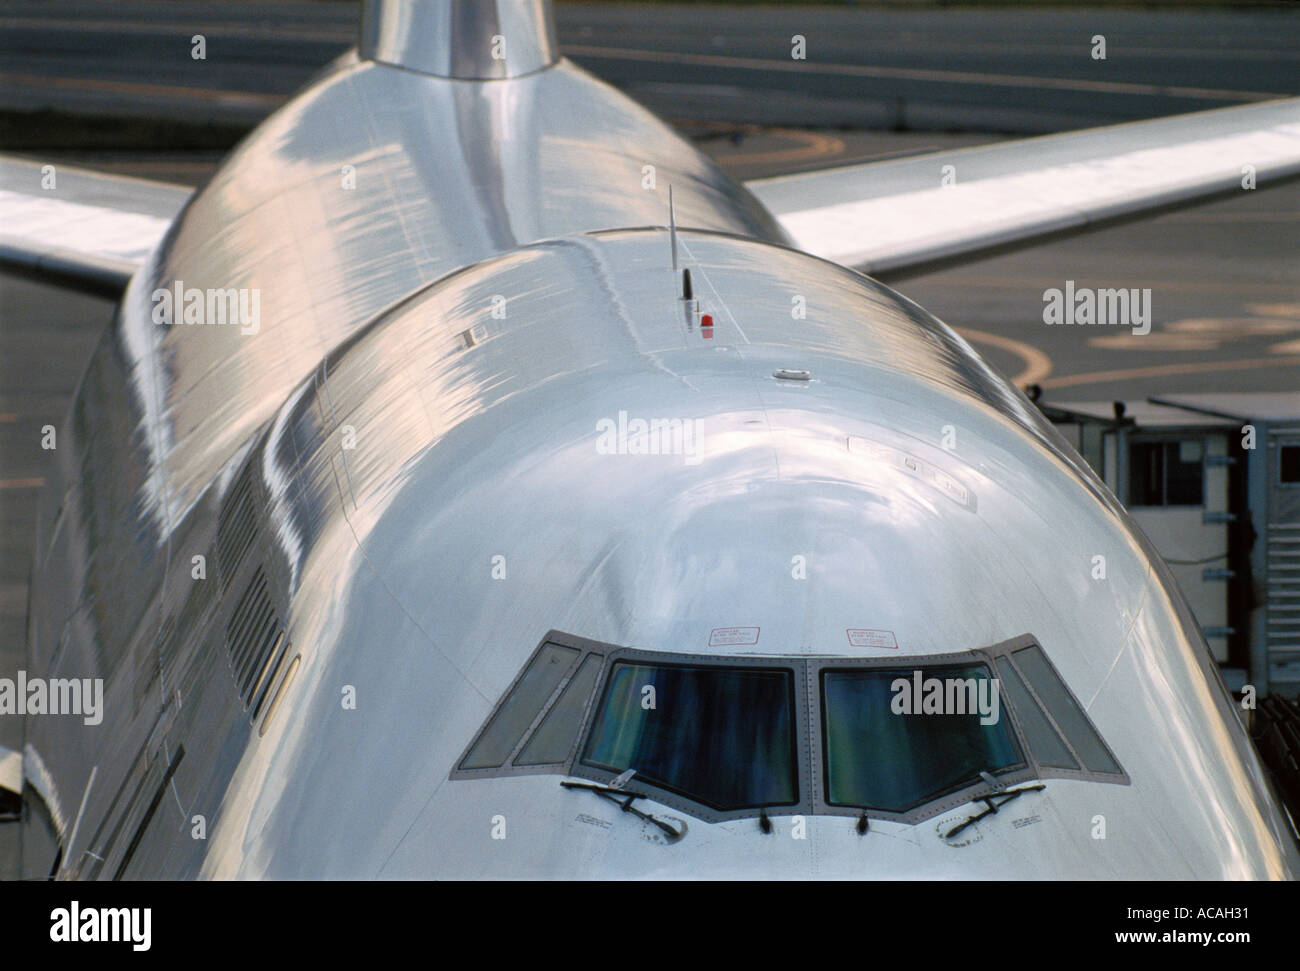 Boeing 747 jumbo jet parked at gate cockpit windows Stock Photo